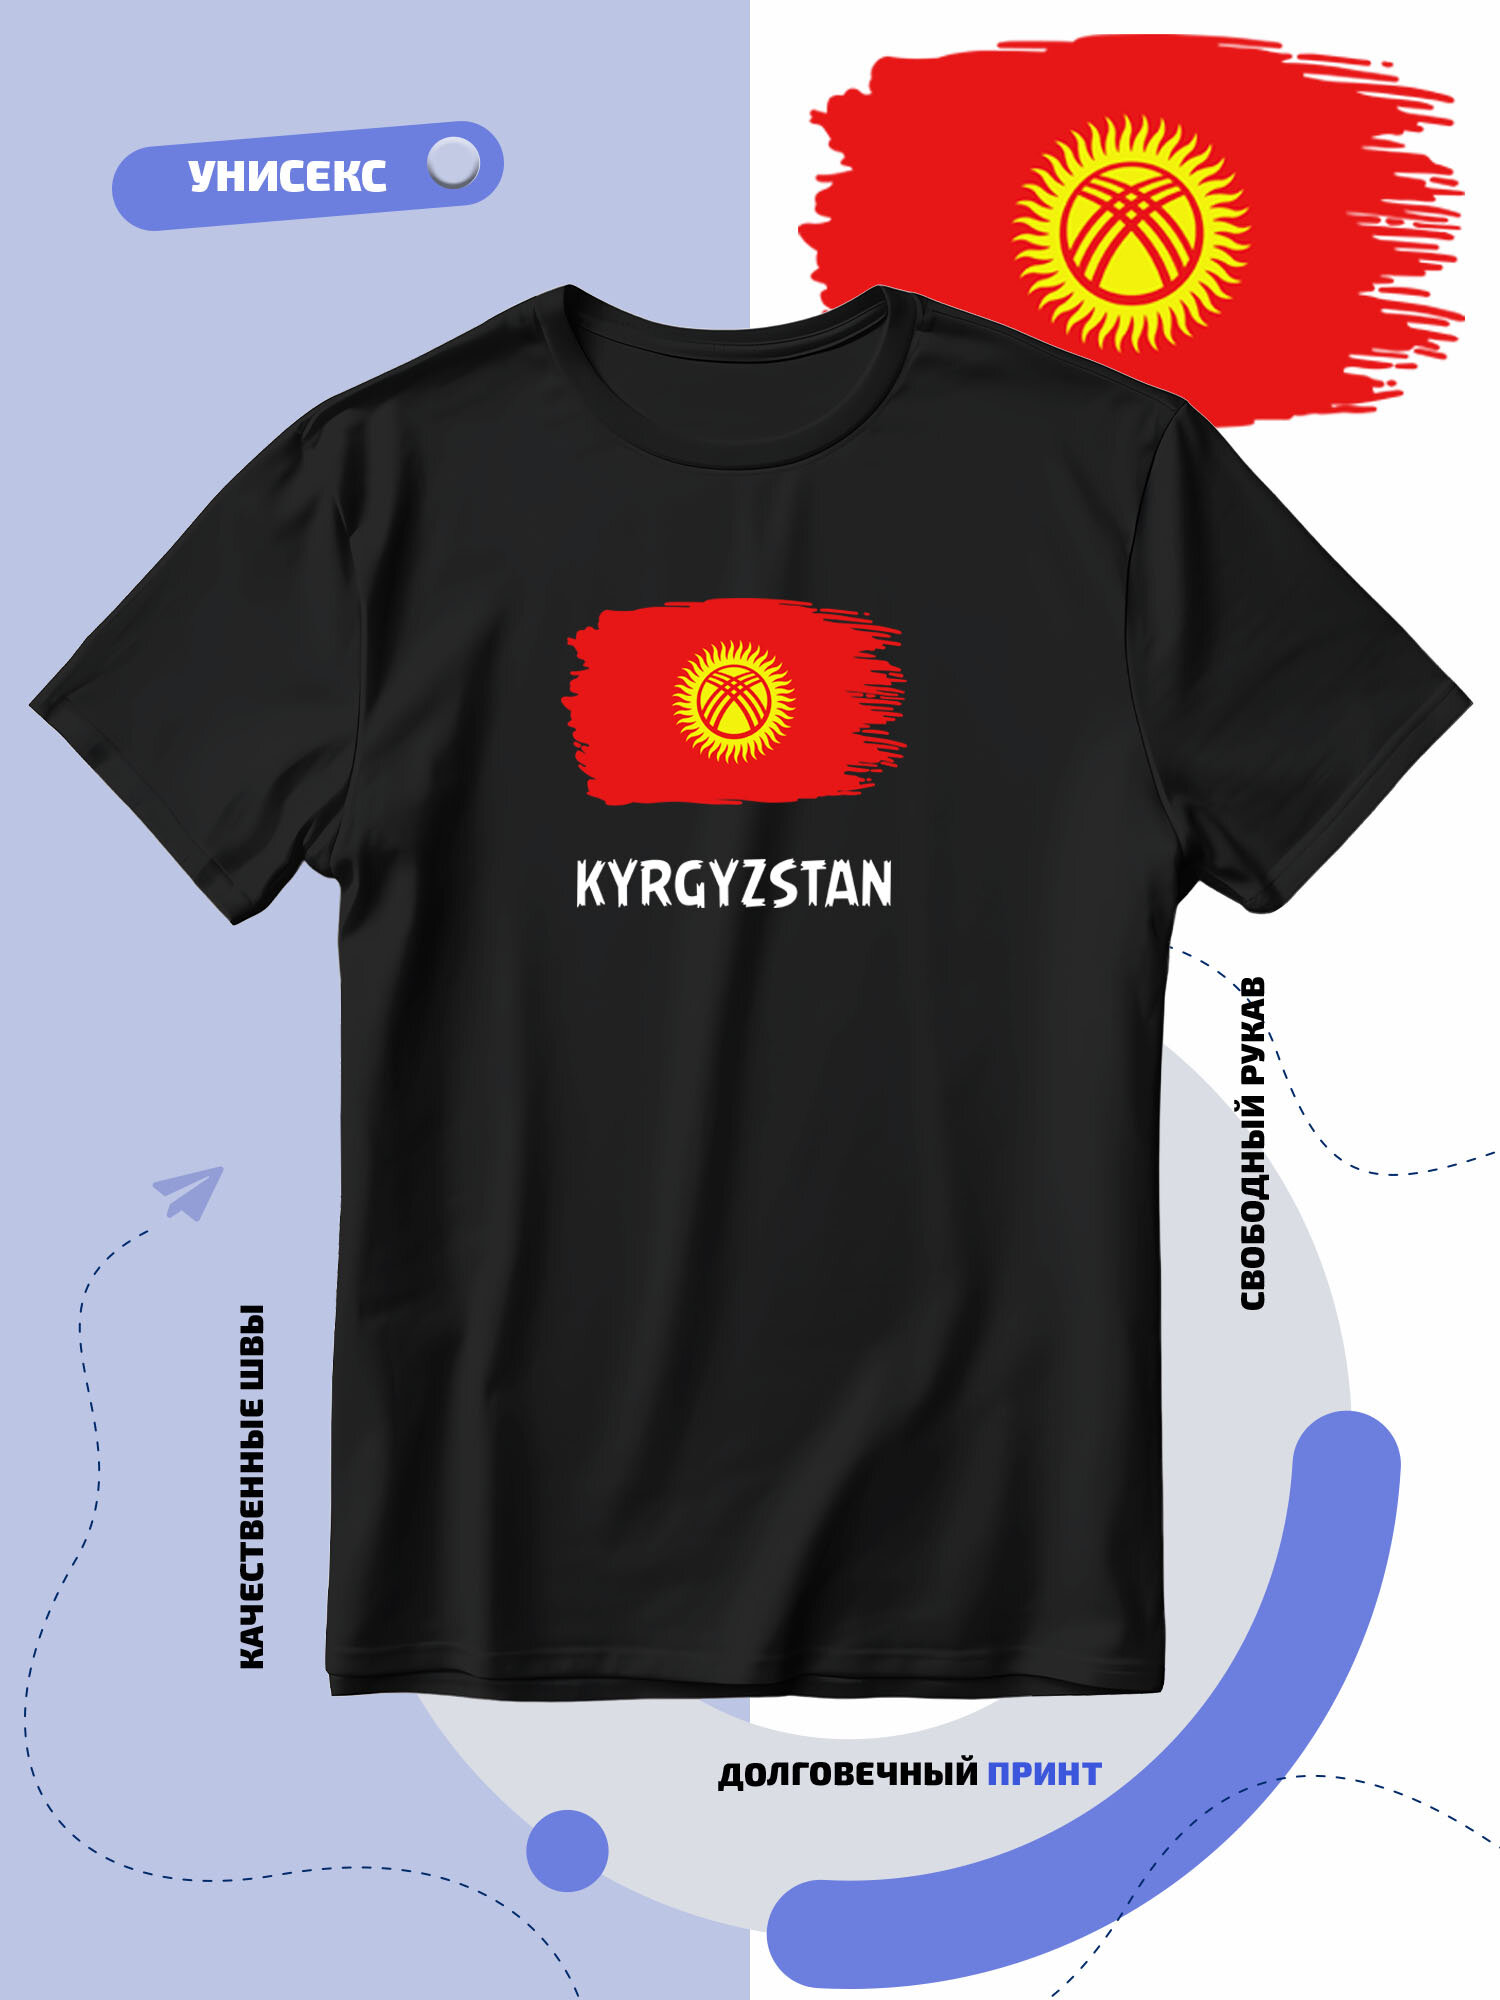 Футболка SMAIL-P с флагом Кыргызстана-Kyrgyzstan